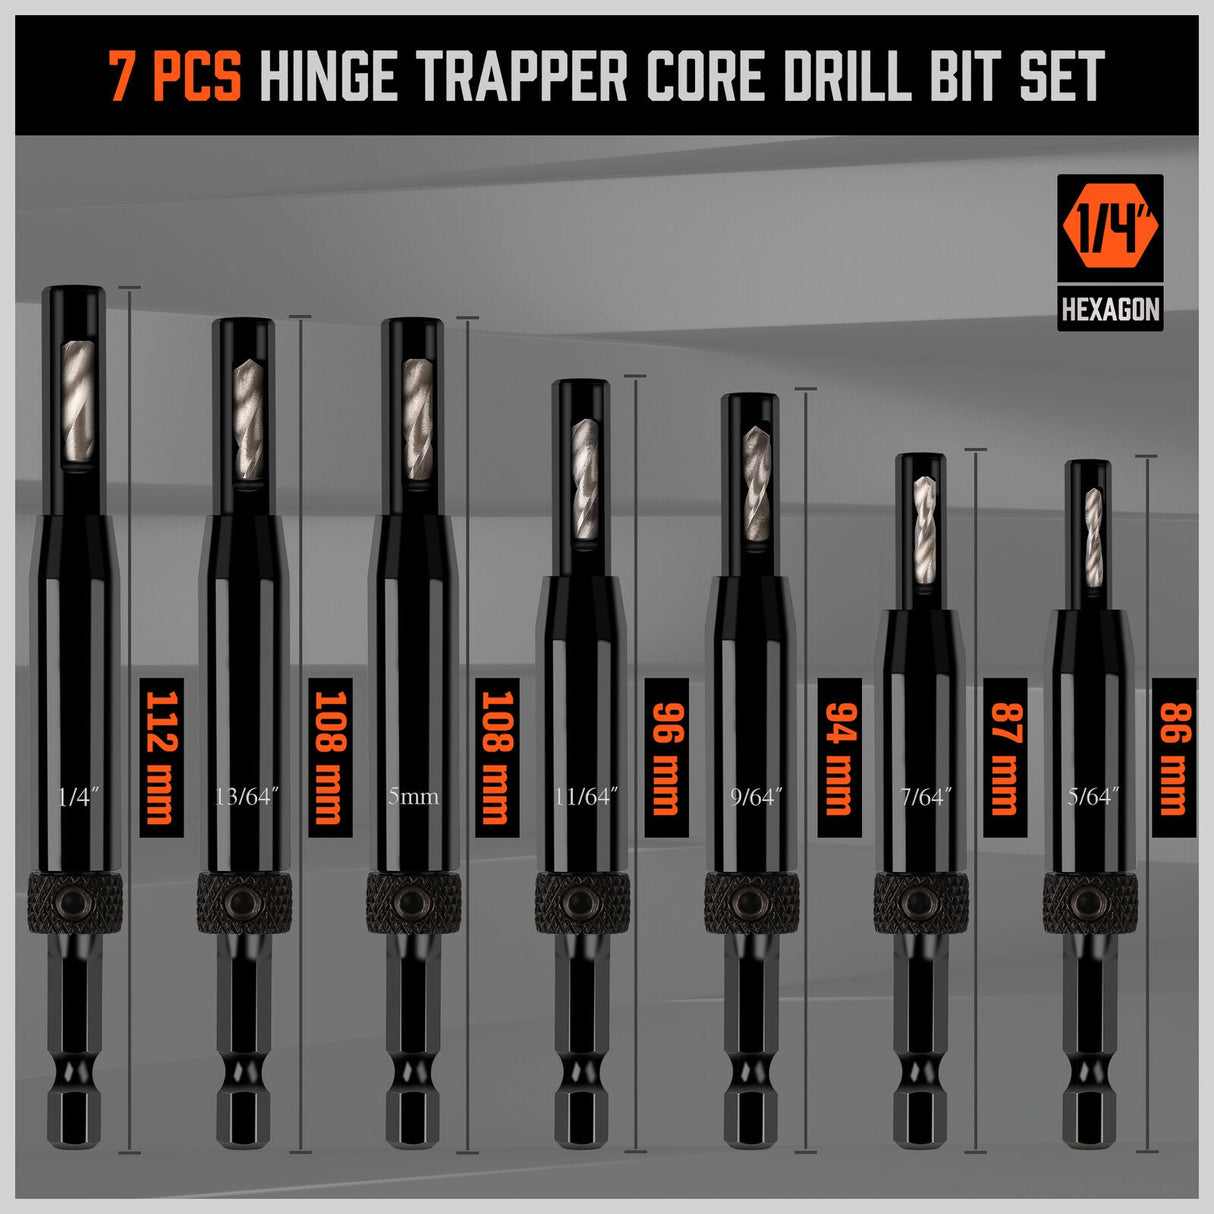 14Pc Self-Centering Hinge Tapper Core Drill Bit Set Center Drill 1/4" Hex Shank